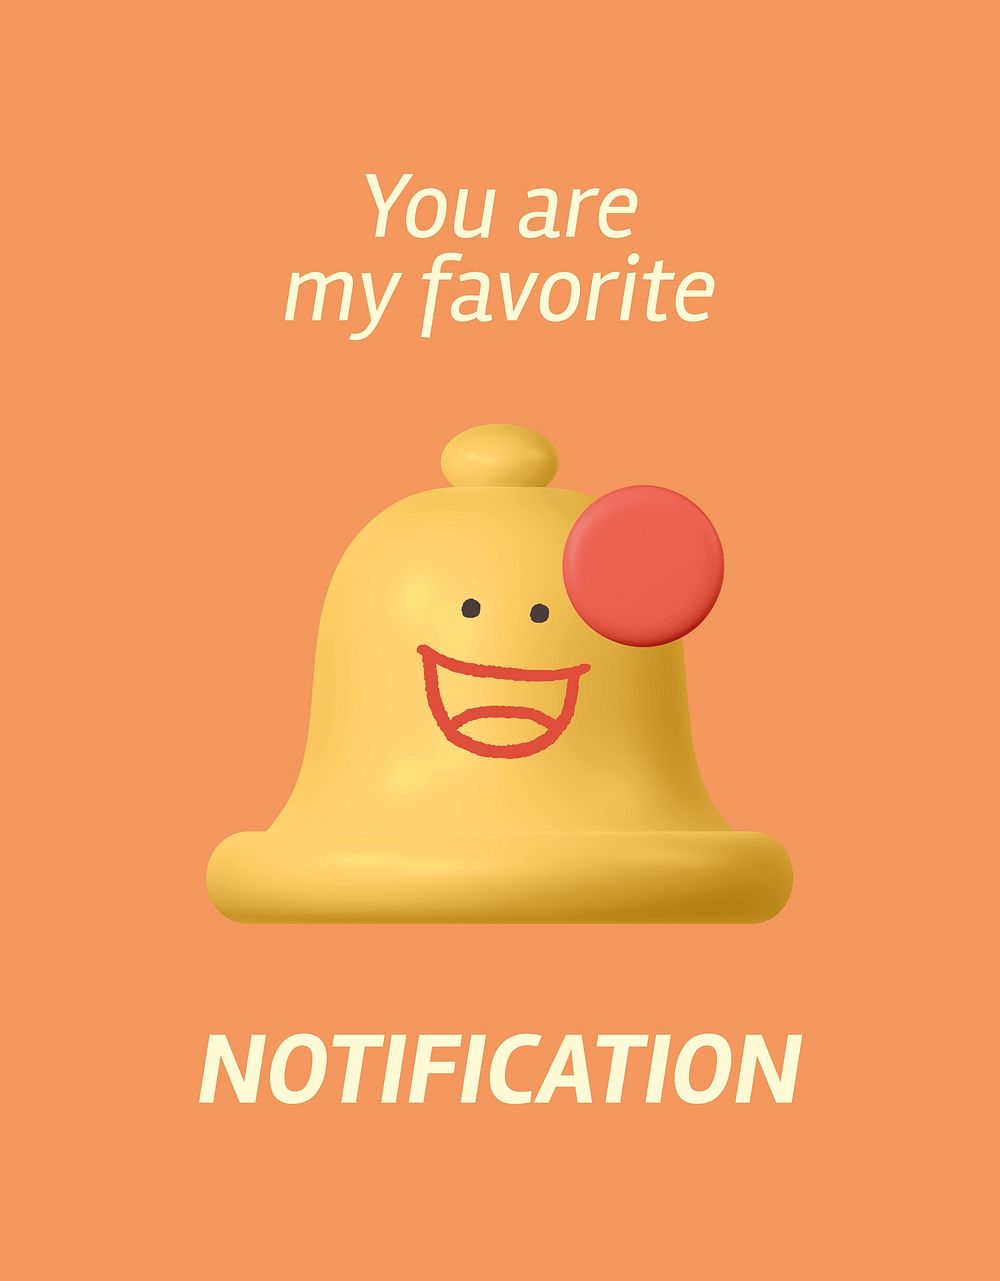 Favorite notification flyer template, 3D bell illustration psd